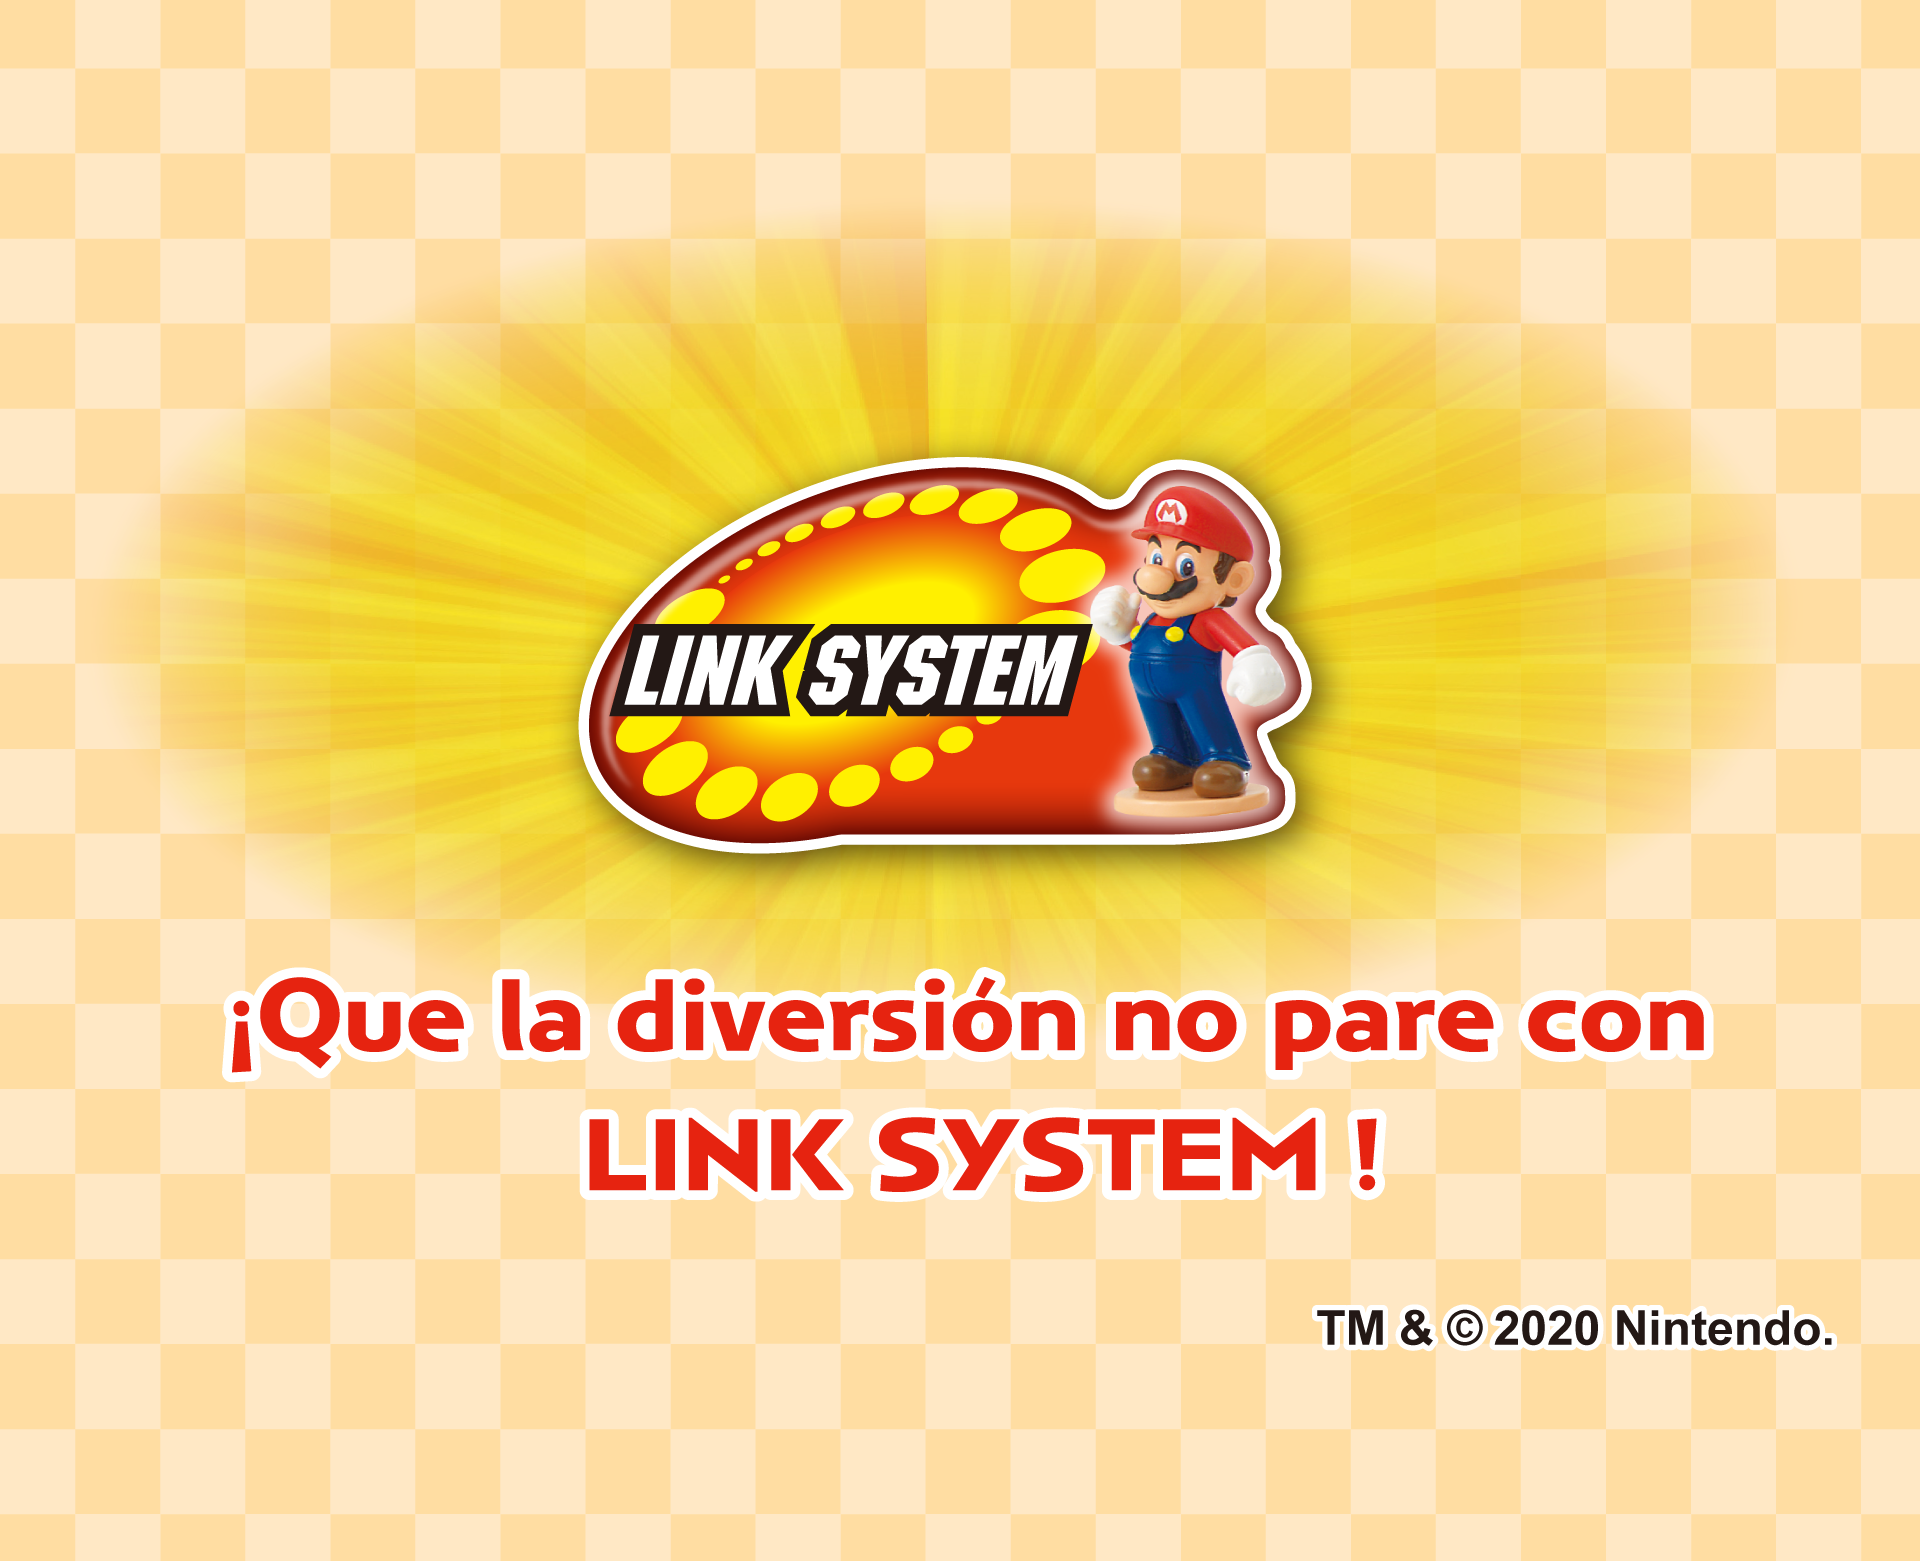 SUPER MARIO LINK SYSTEM
